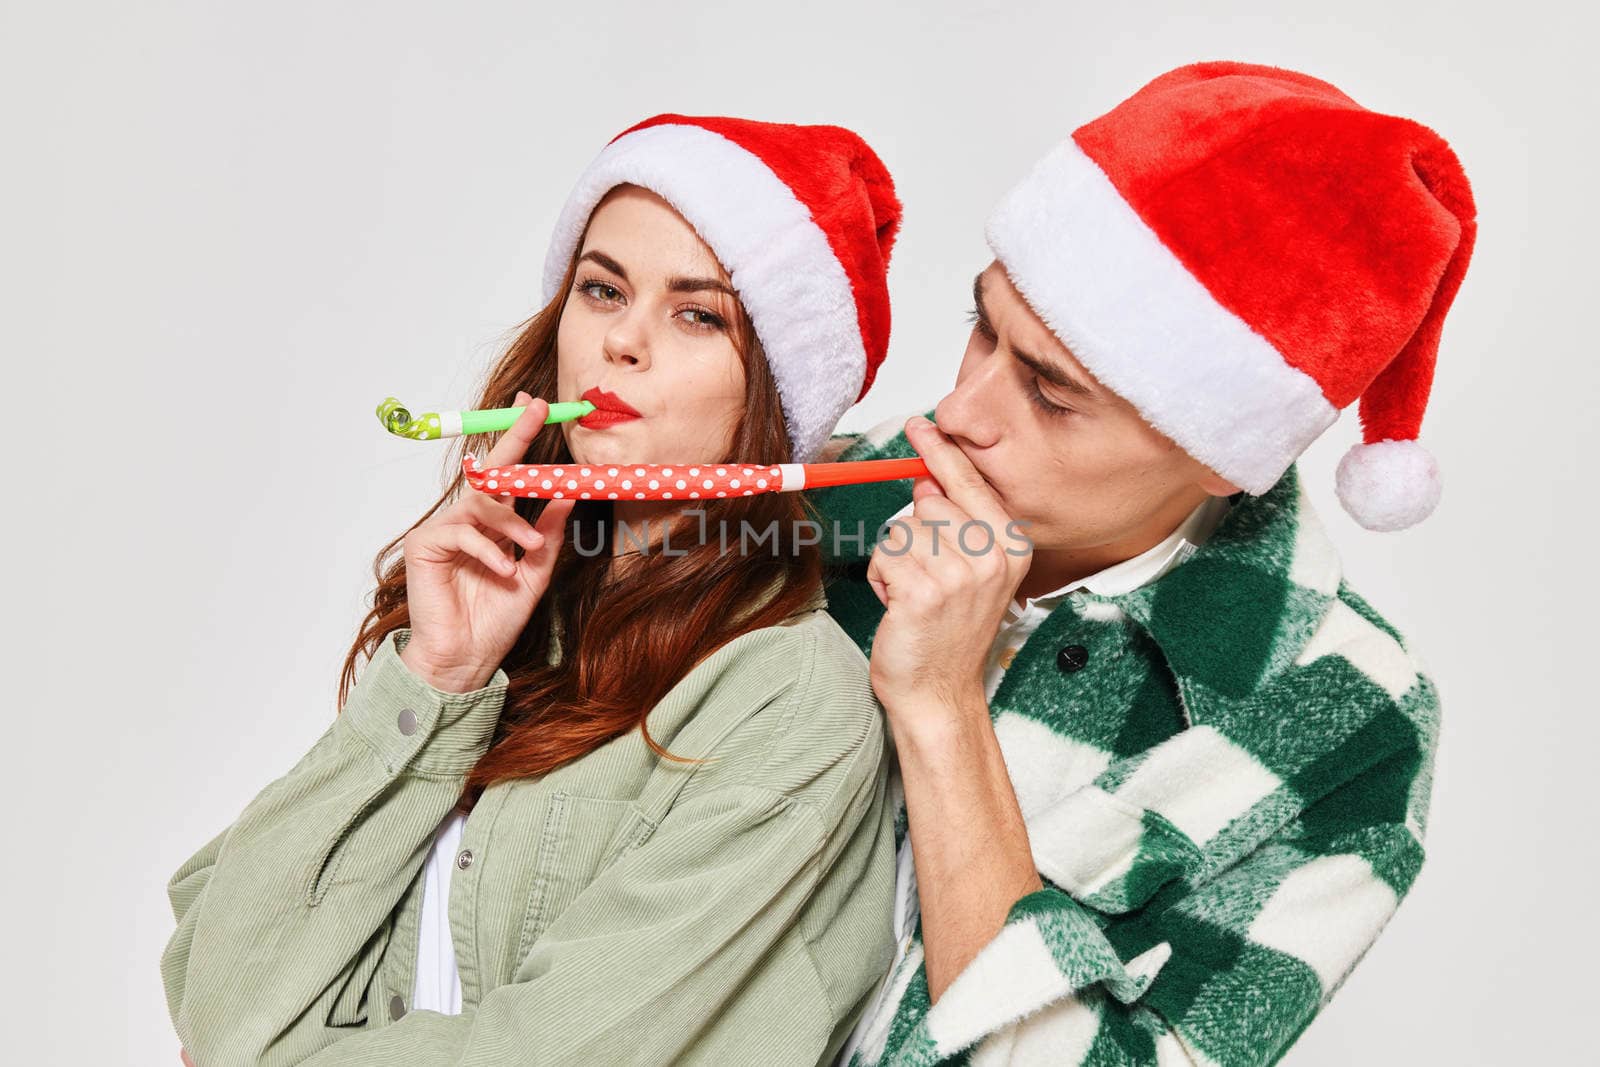 Man and woman festive mood fun Christmas New Year fashion. High quality photo